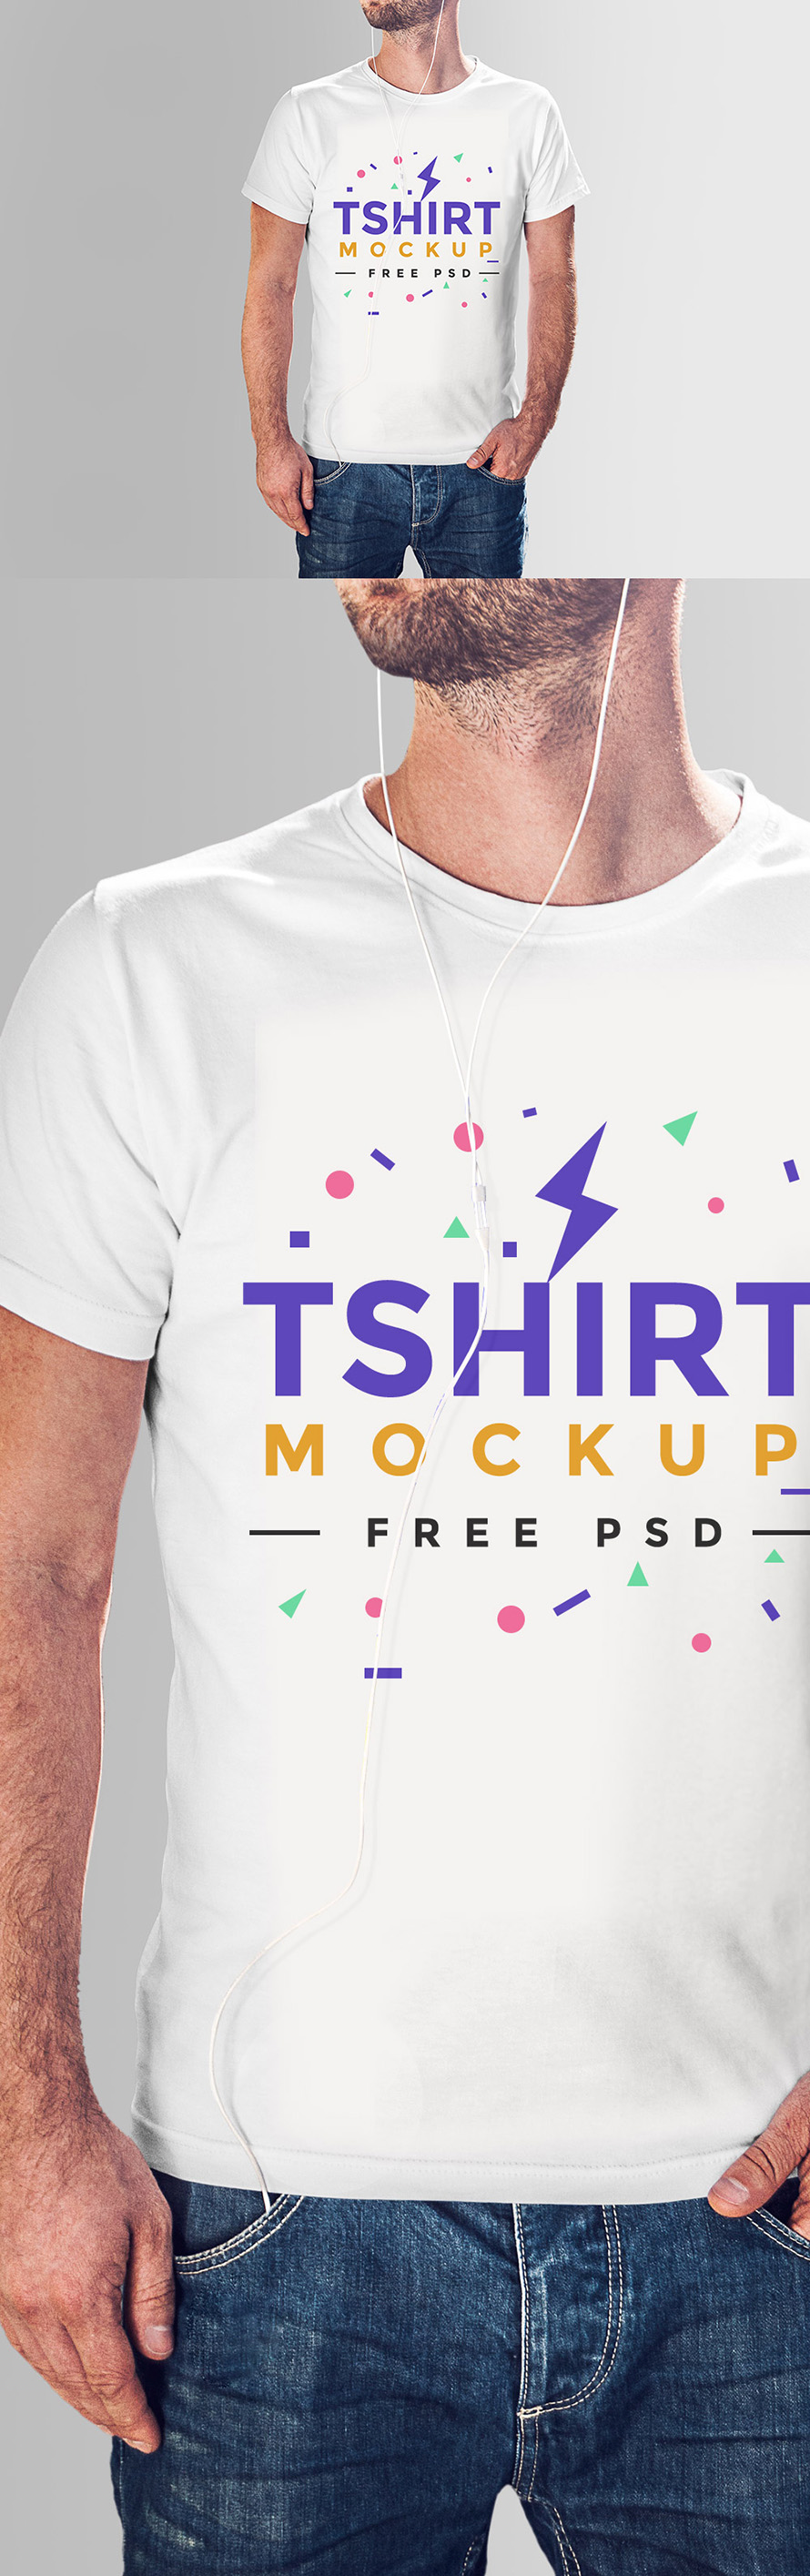 Free Tshirt Mockup PSD Template